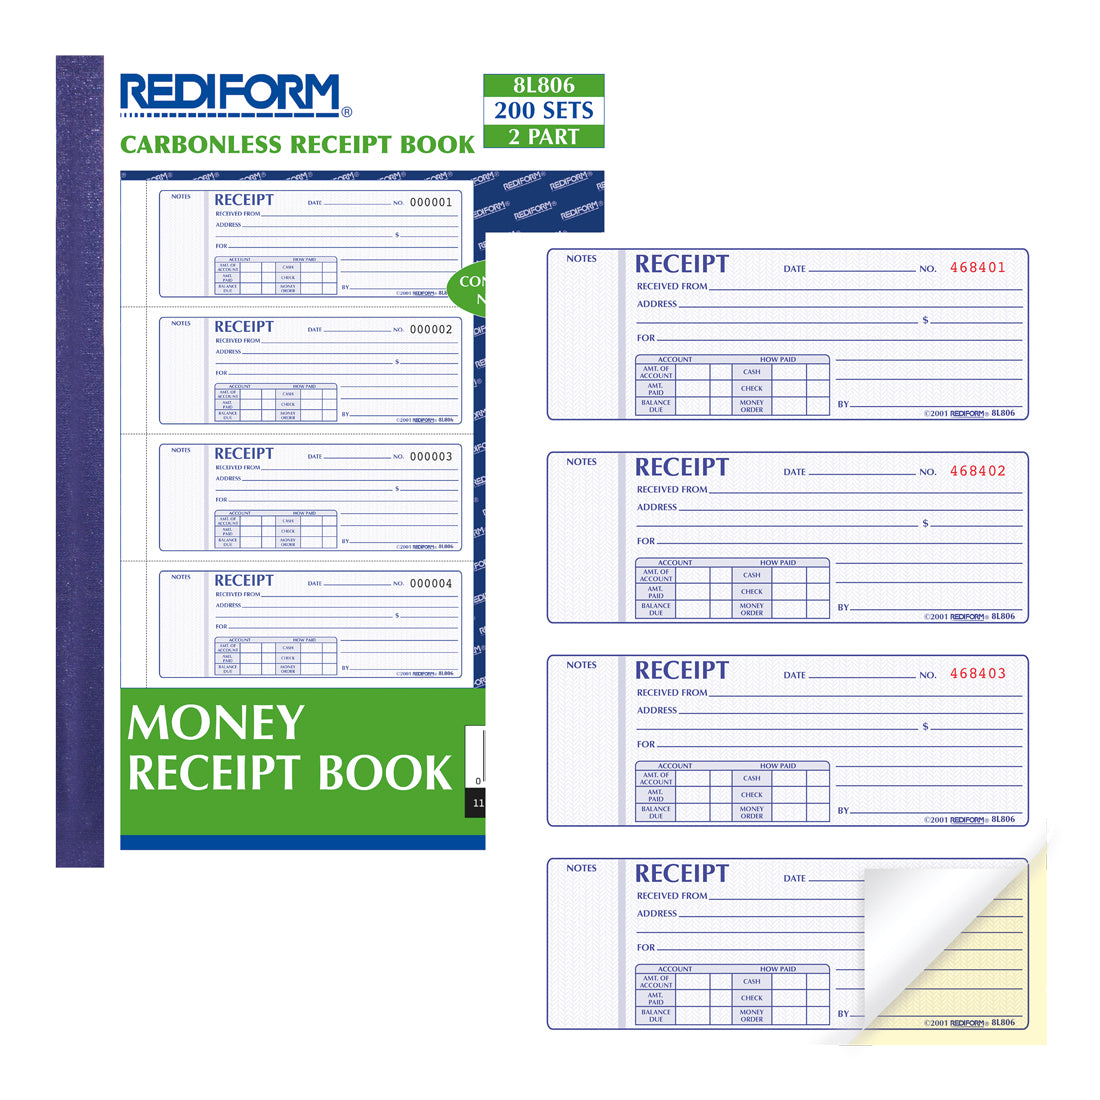 Money Receipt Book 8L806